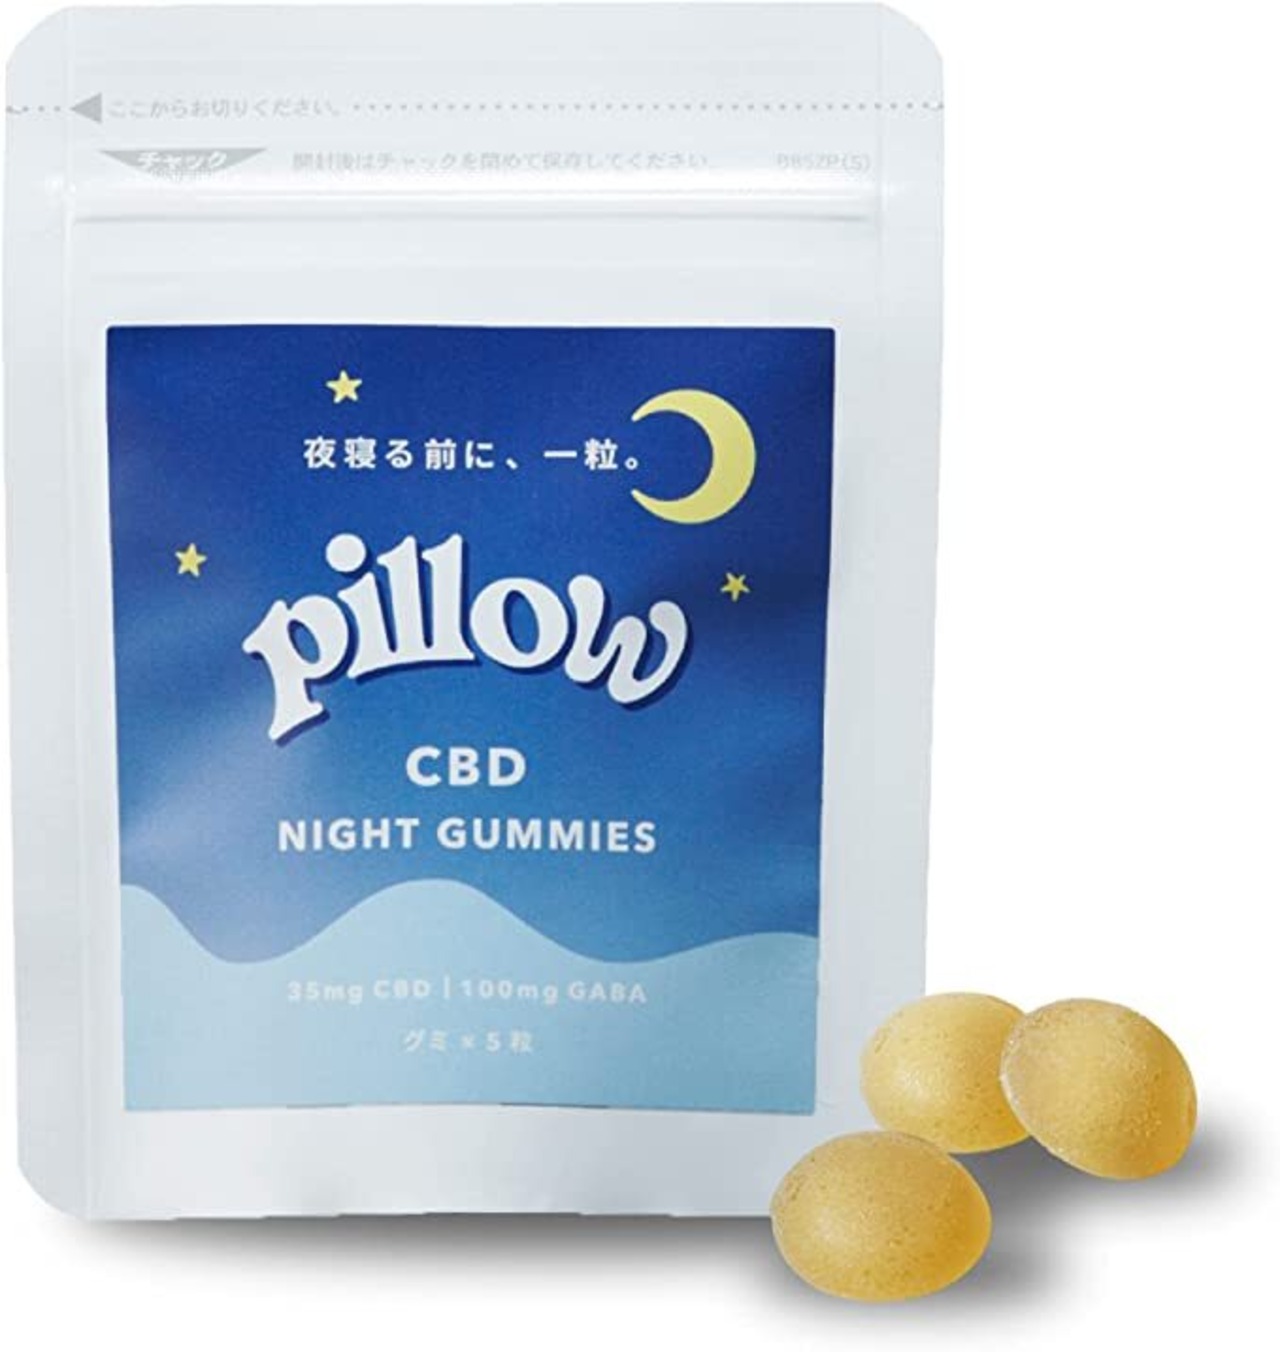 Pillow, CBD NIGHT GUMMIES-5粒入り(CBD25mg/1粒)、GABA100mg,テアニン100mg、マスカット味